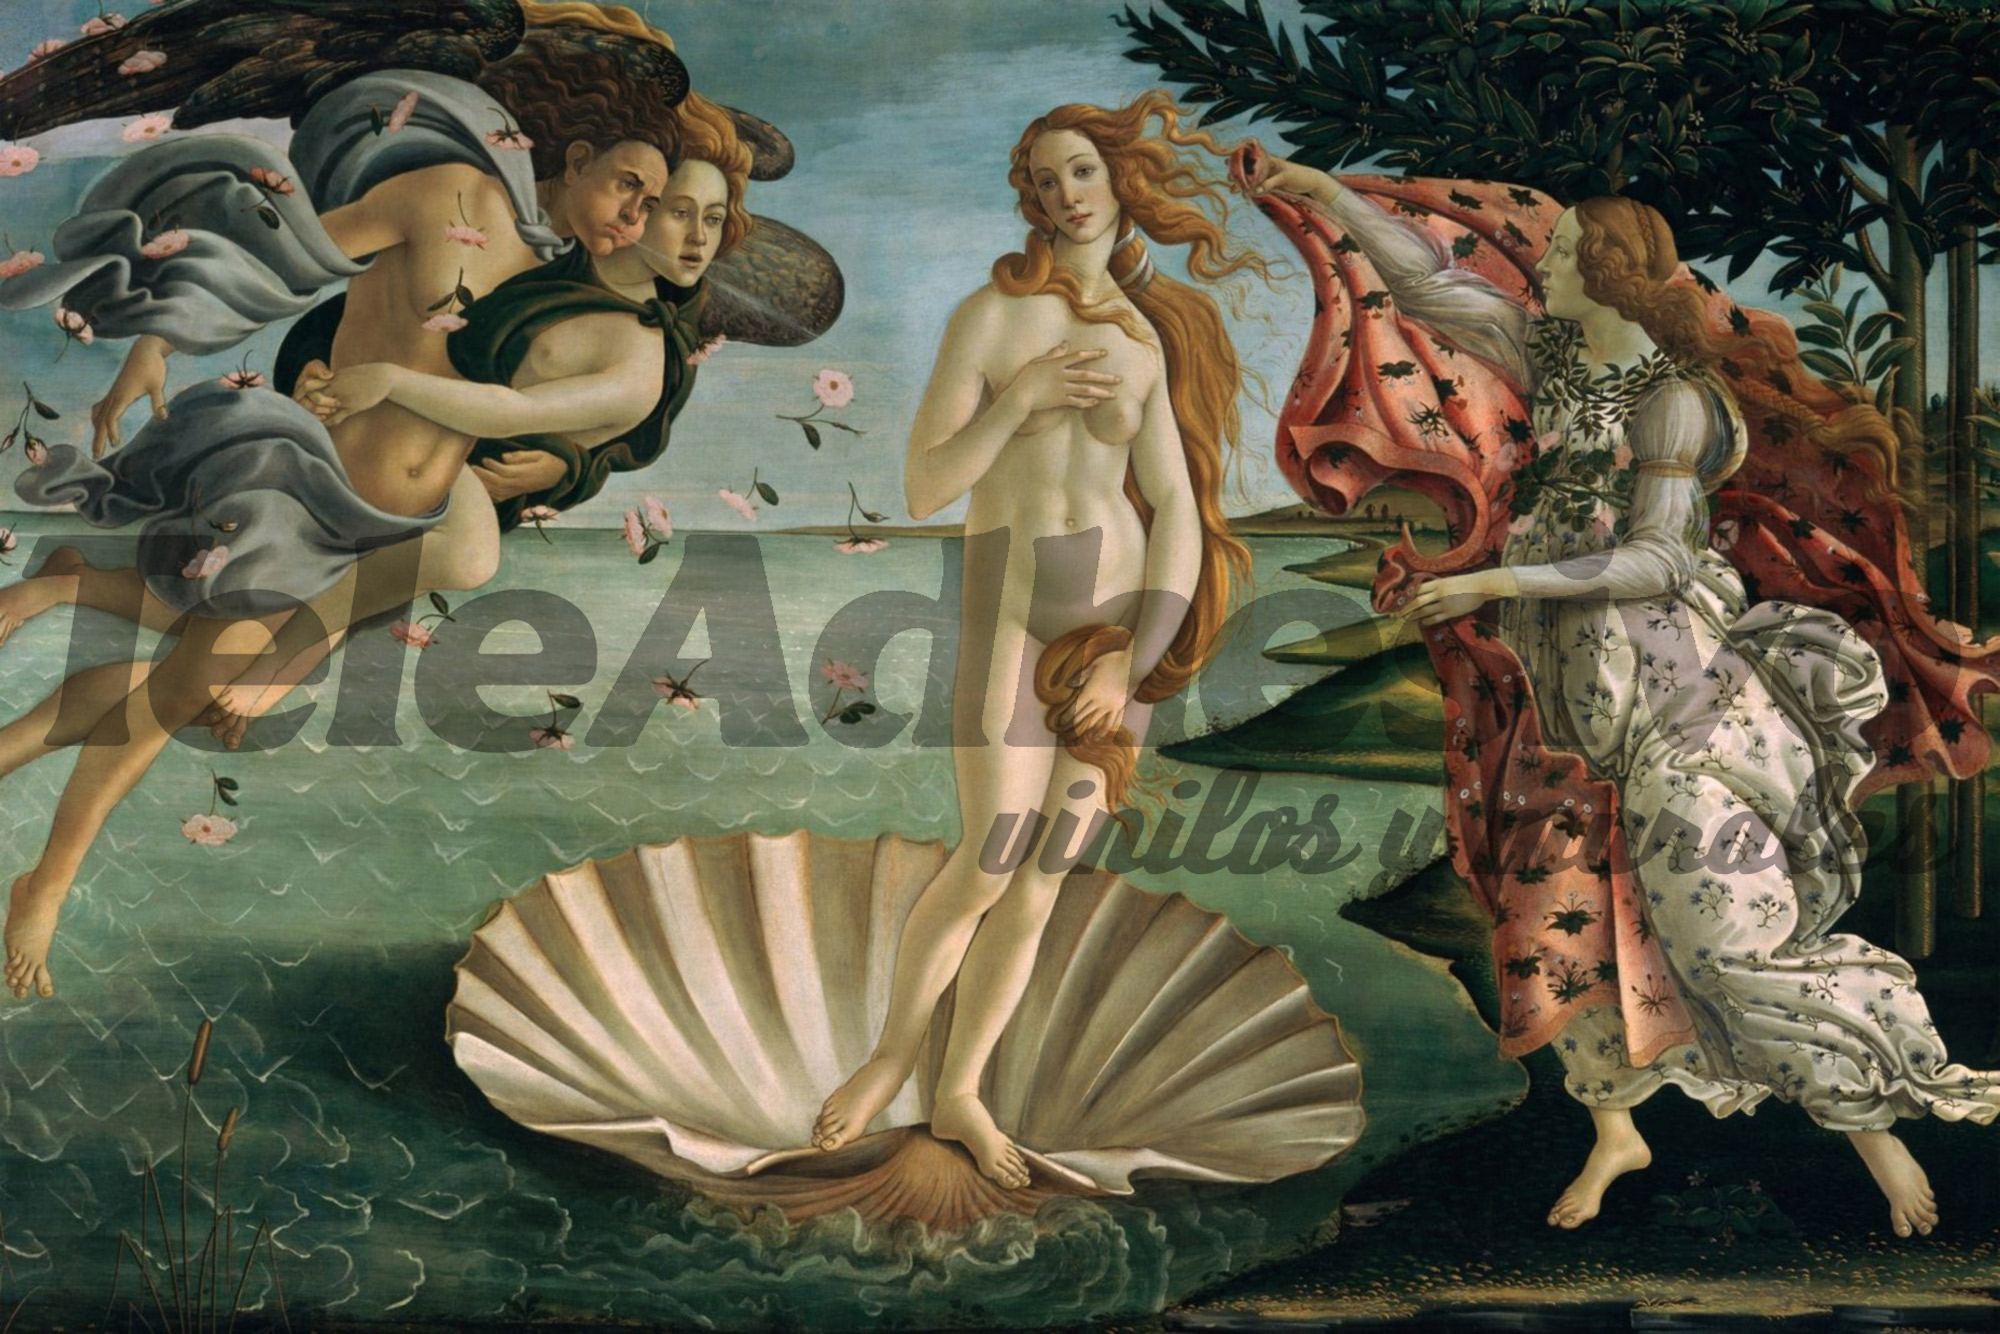 Wall Murals: Birth of Venus, Botticelli